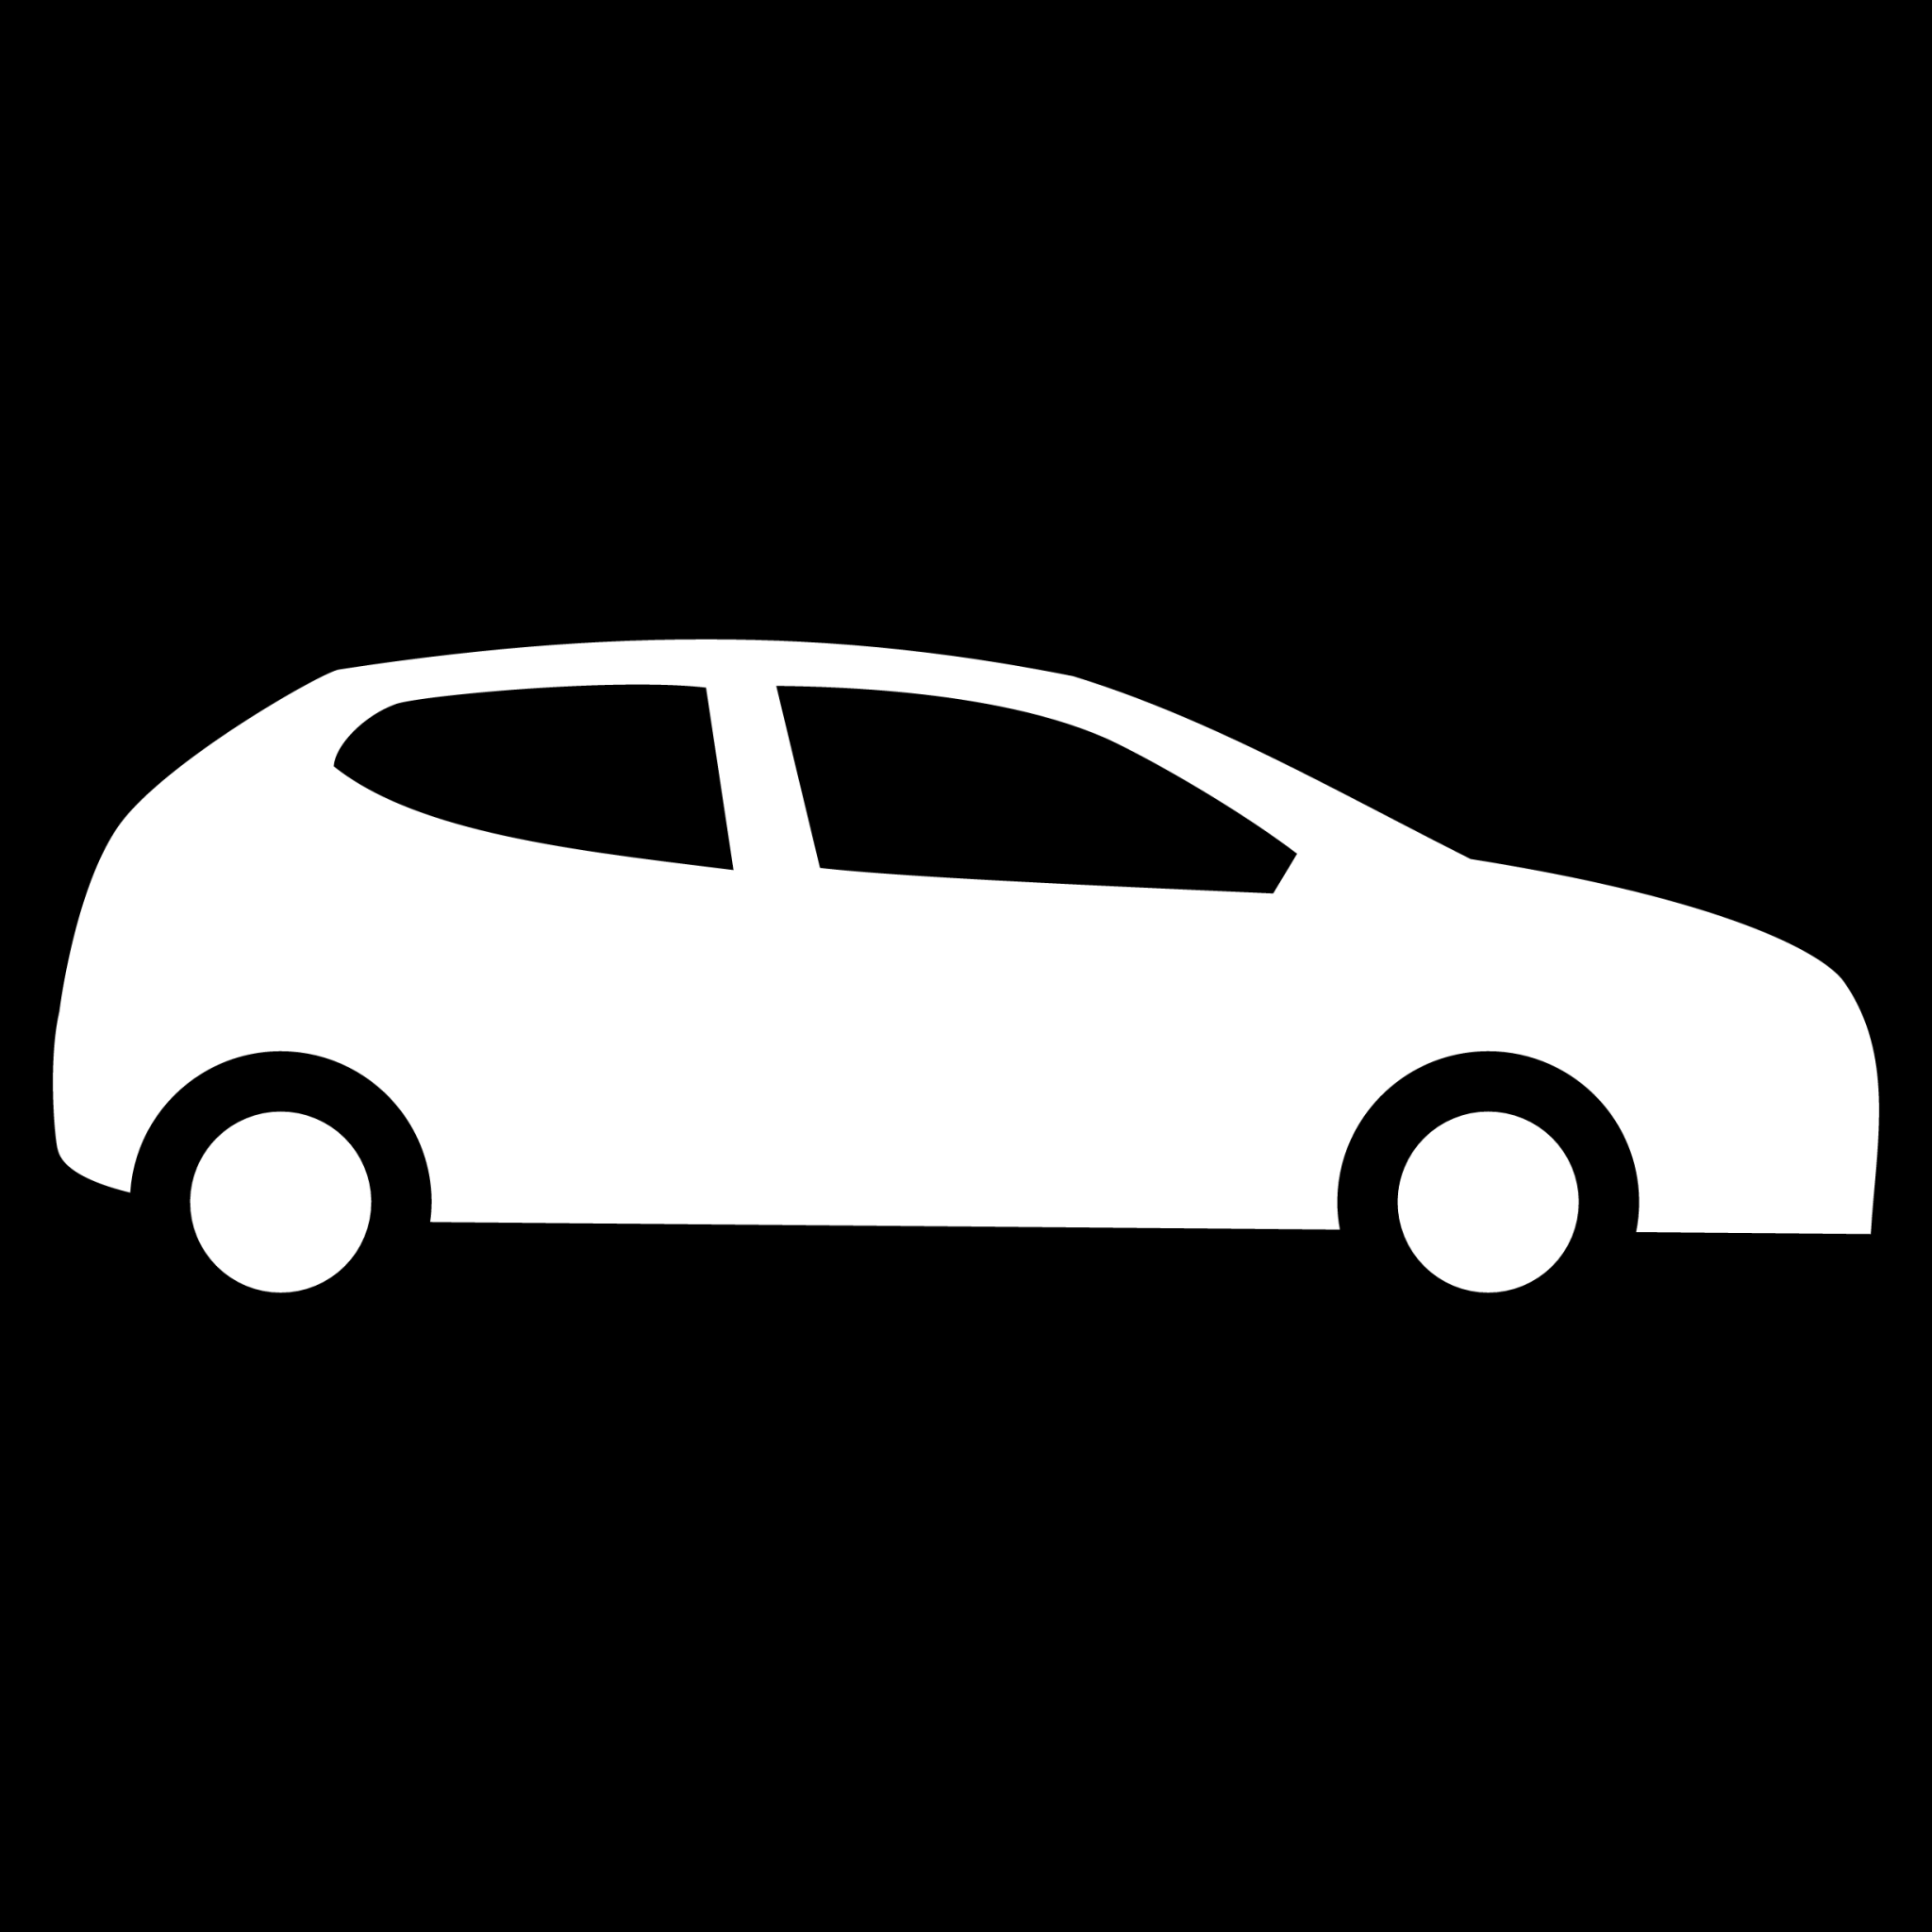 city car icon